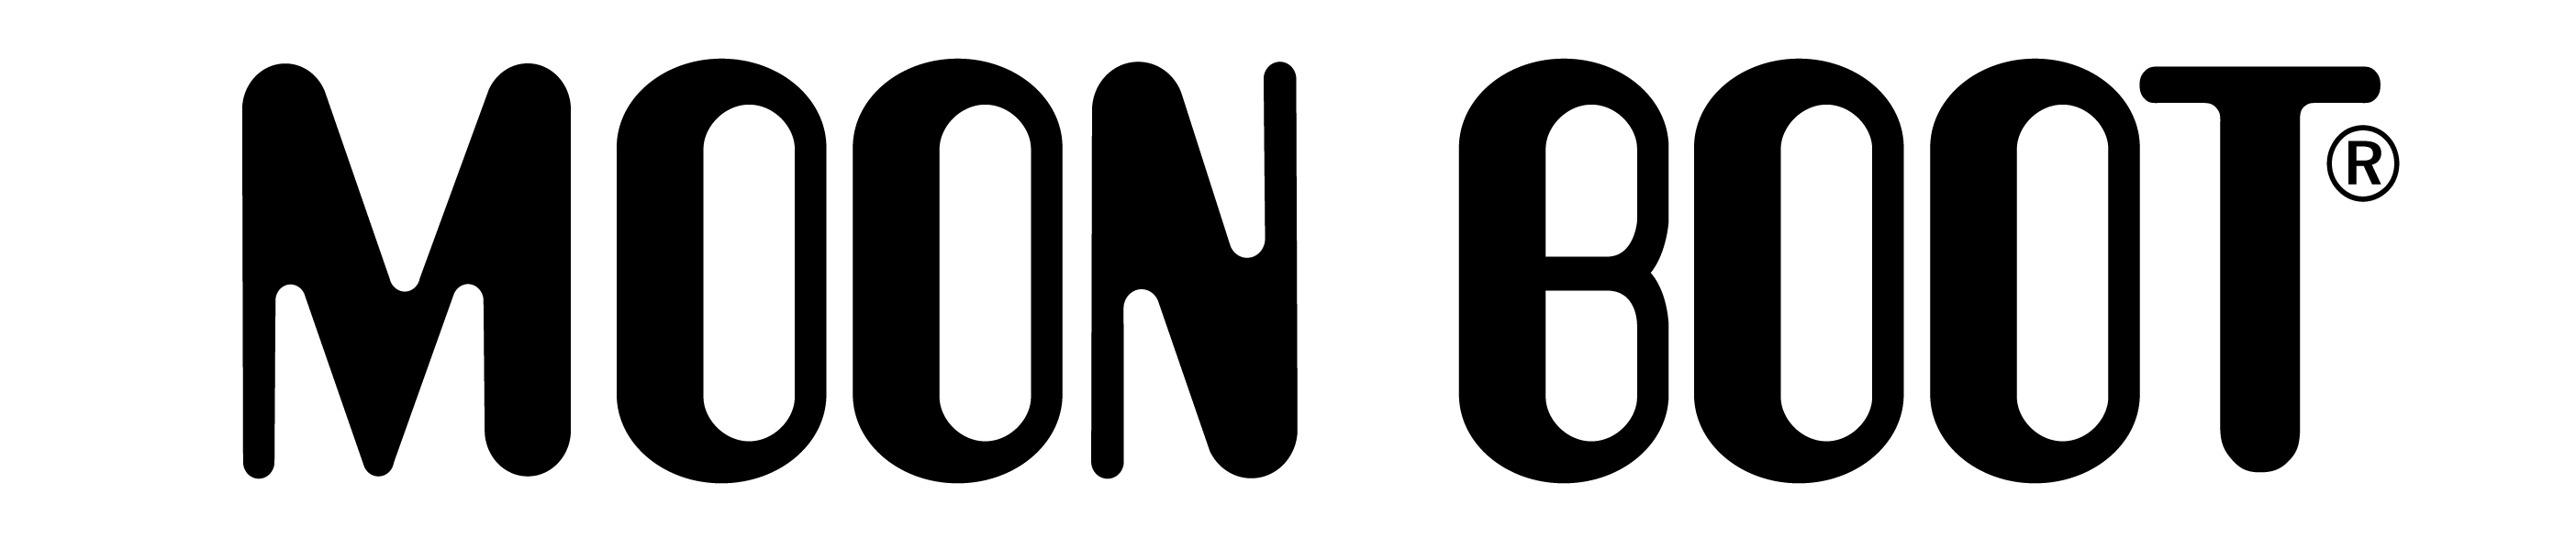 MOON BOOT logo